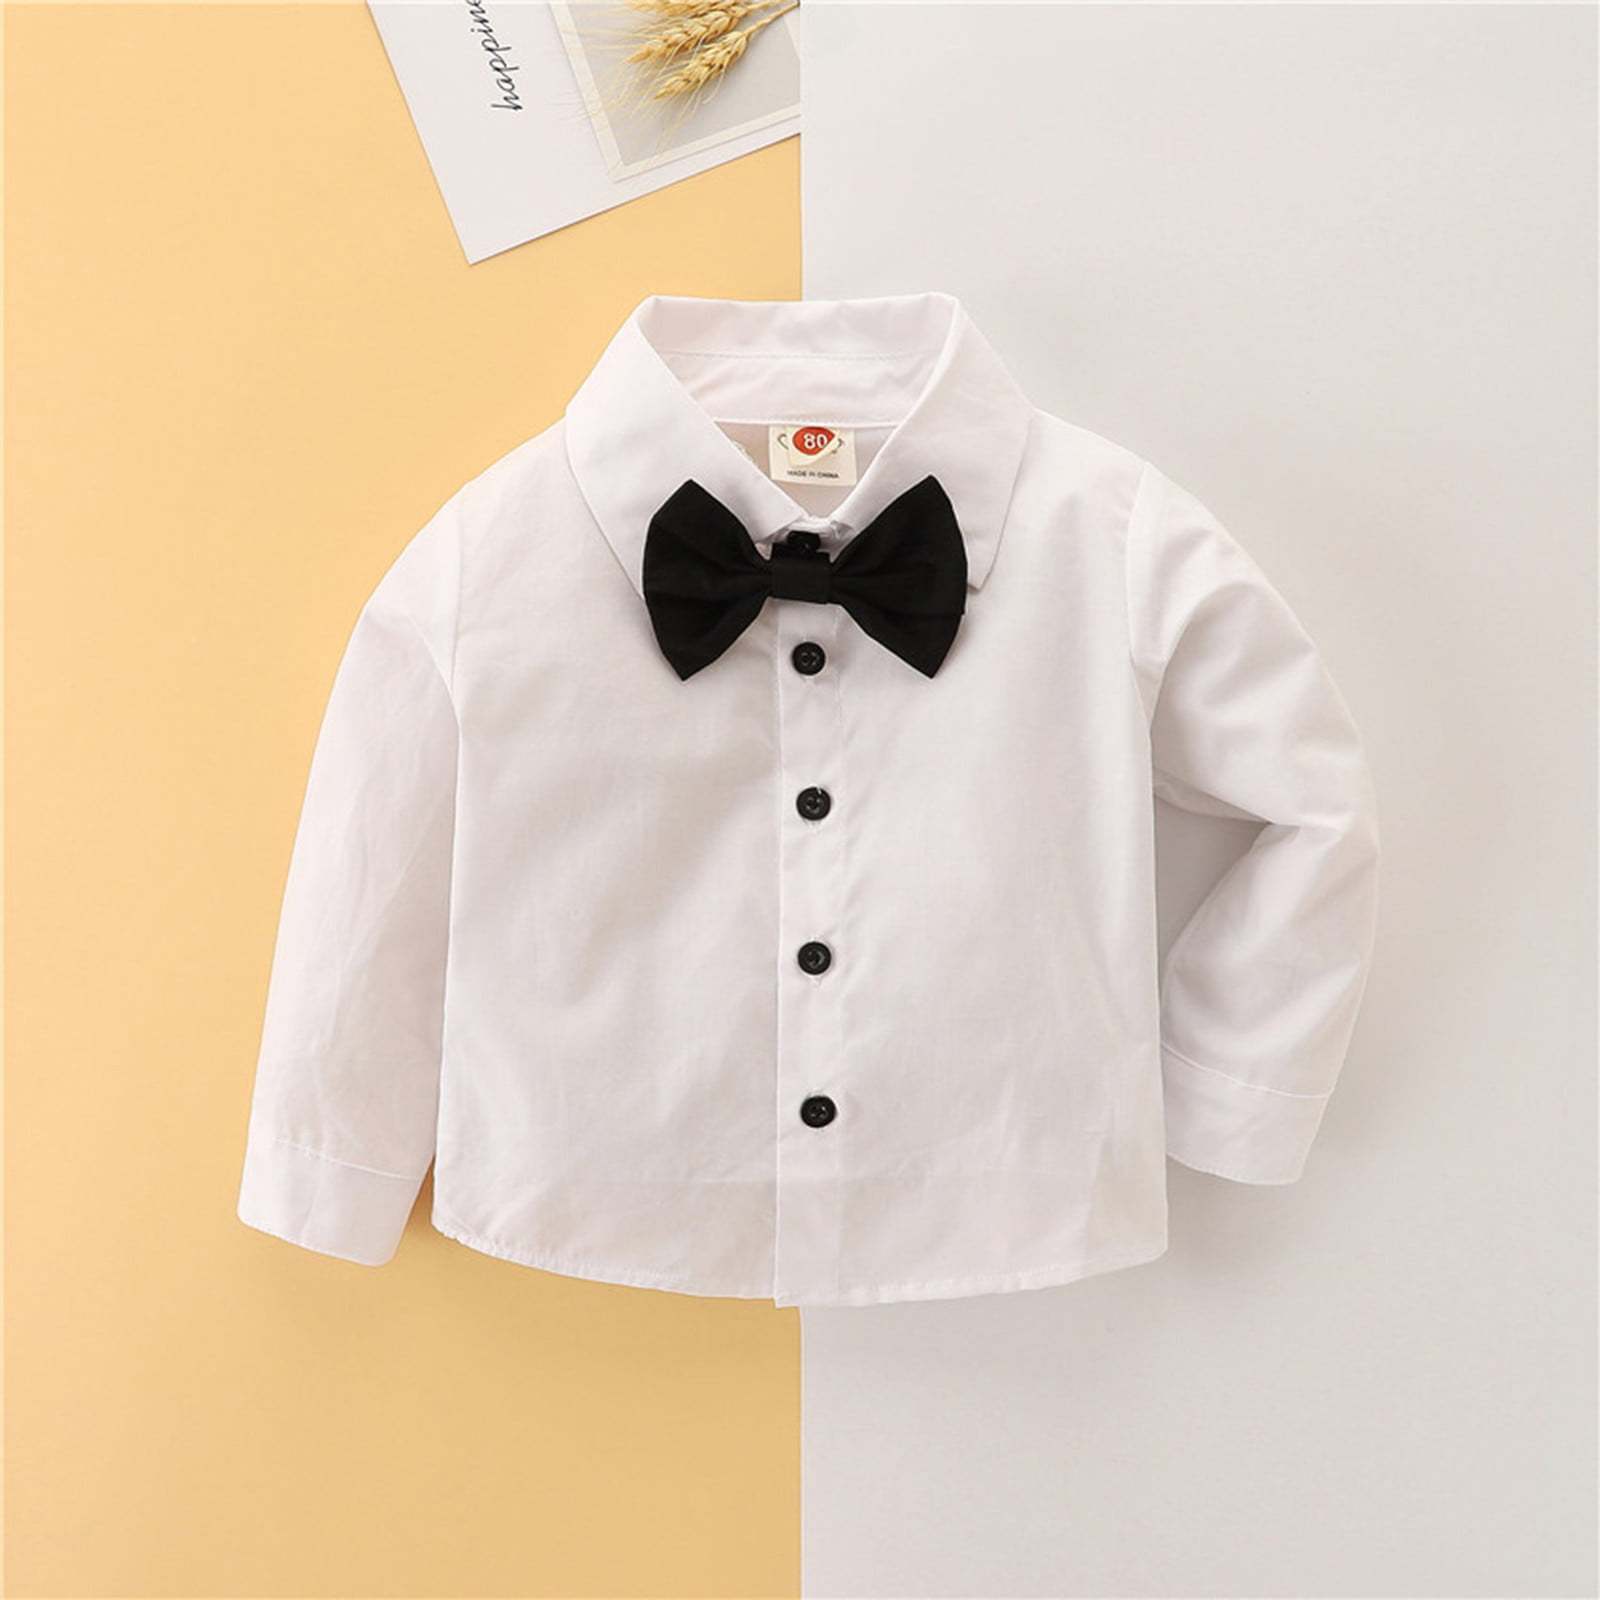 Dressing White Shirt Black Tie Gray Stock Photo 170958524 | Shutterstock